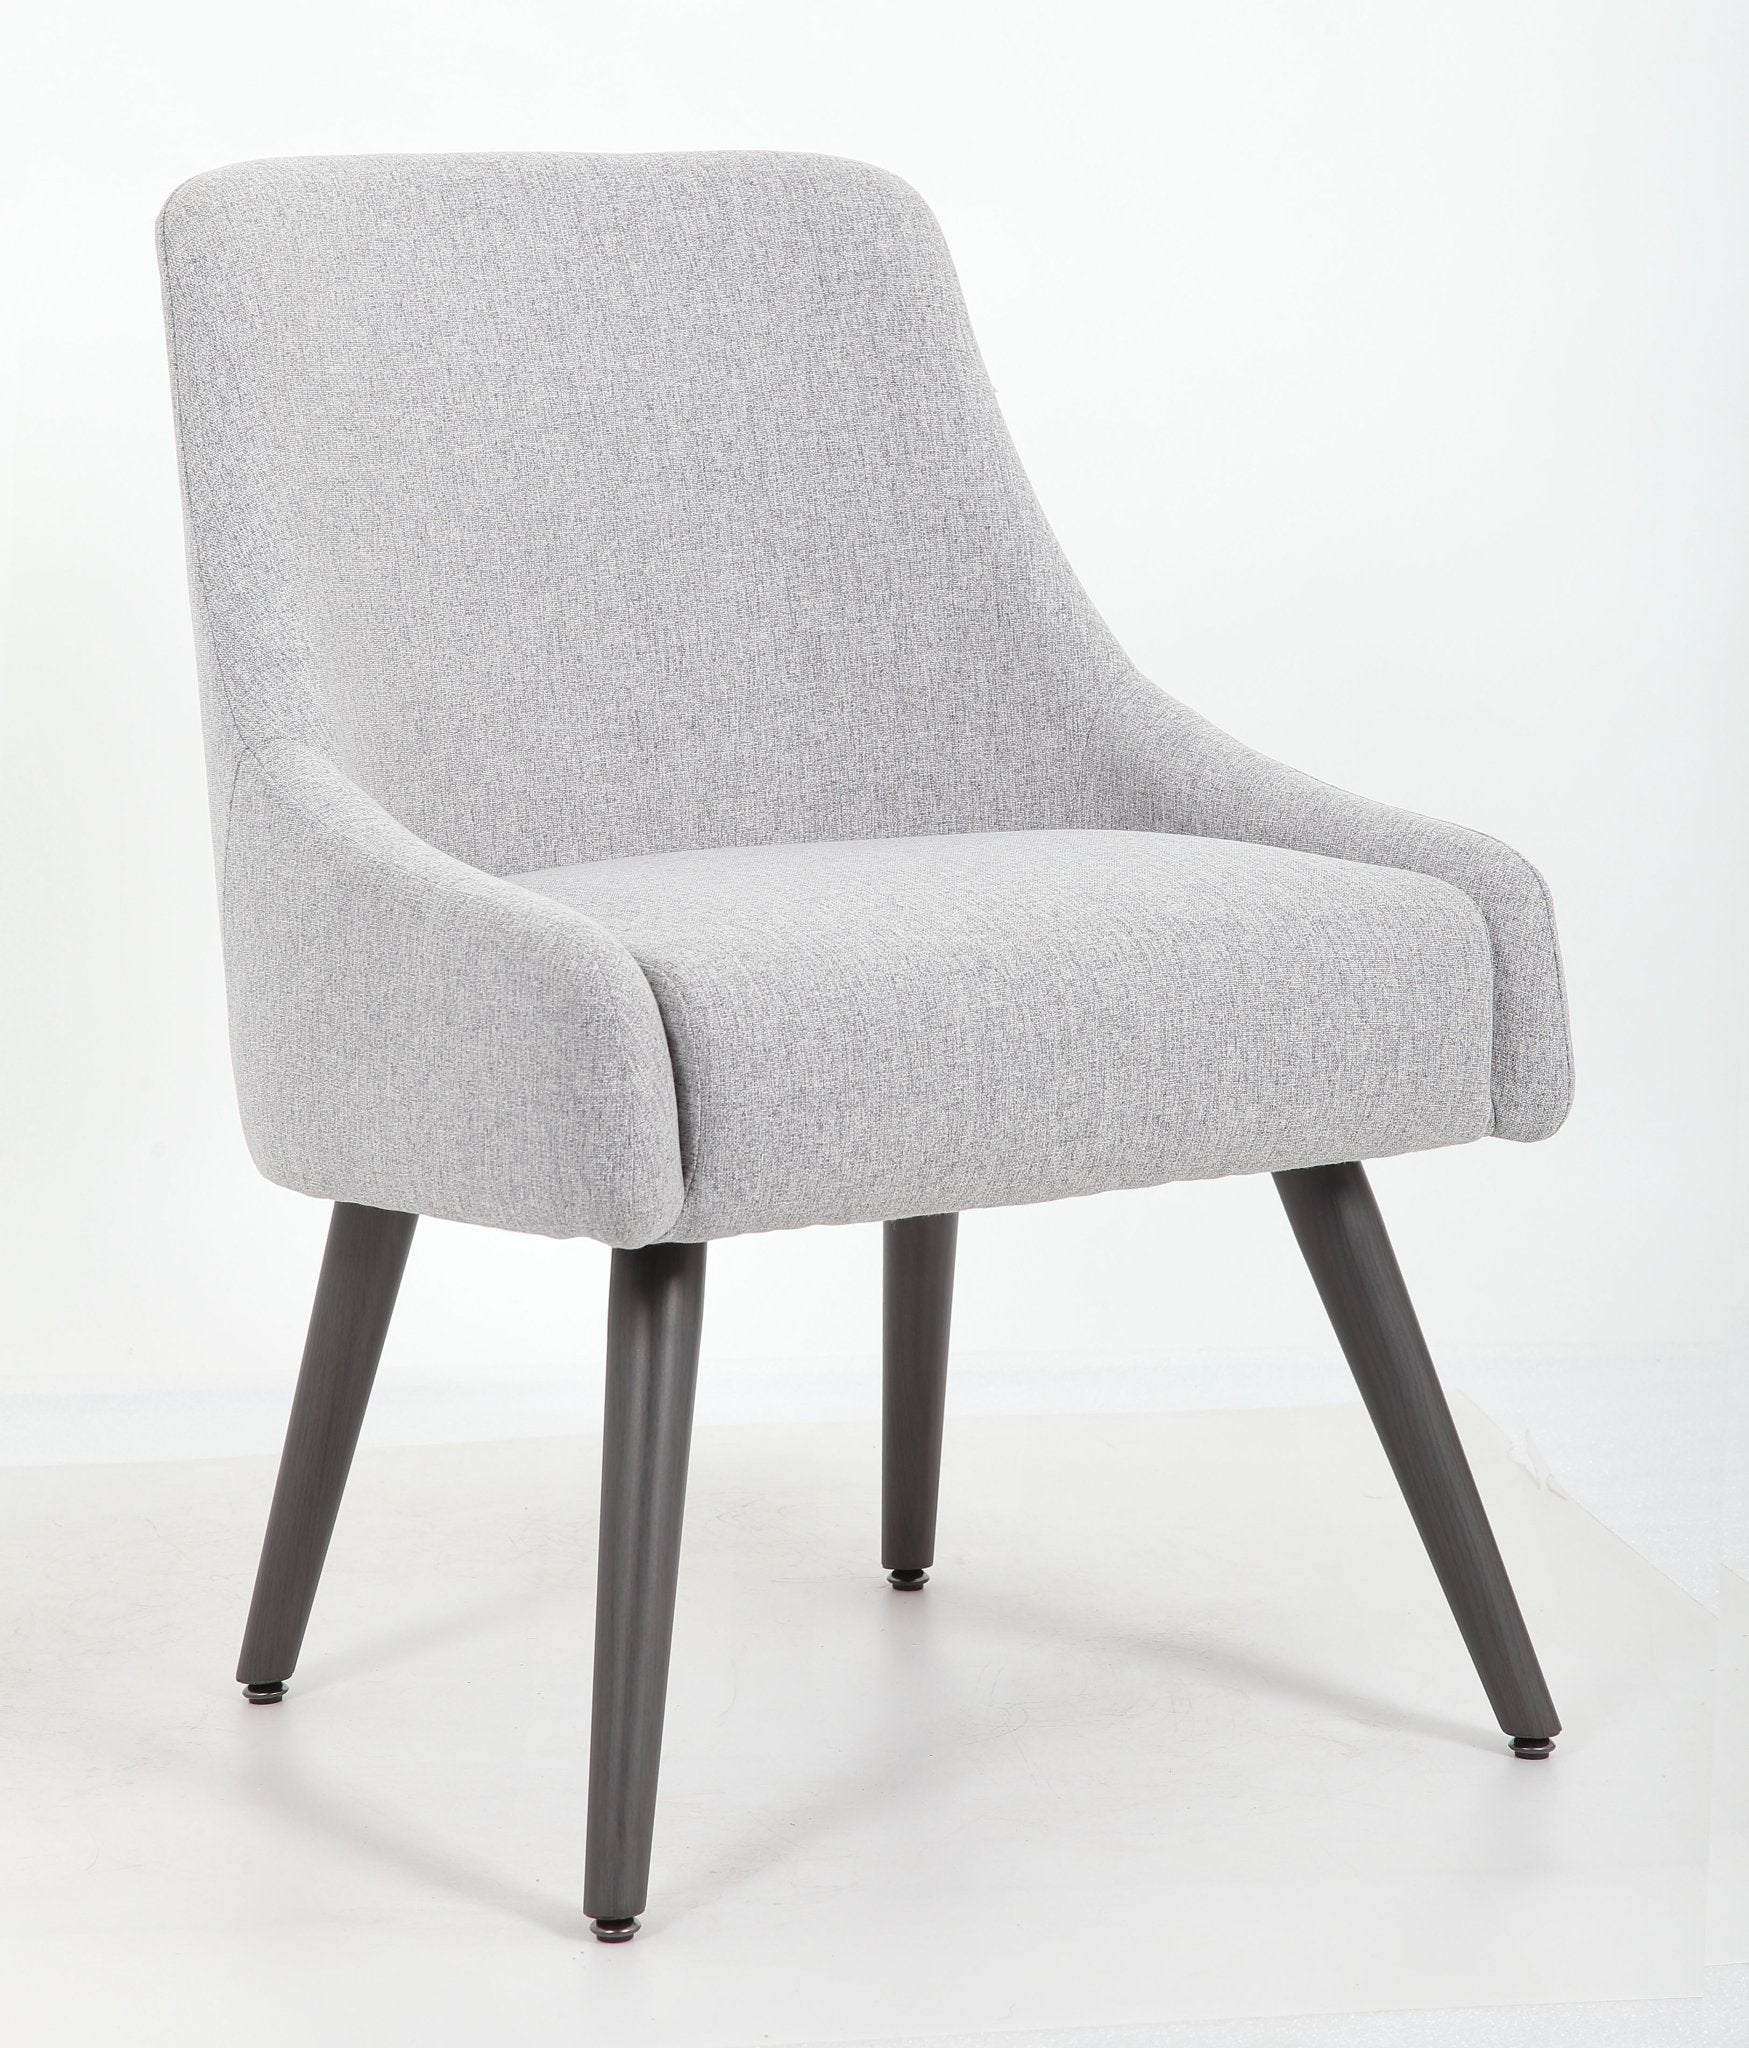 Boss Boyle Poly - Linen Weave Guest Chair, Grey (B579) - SchoolOutlet